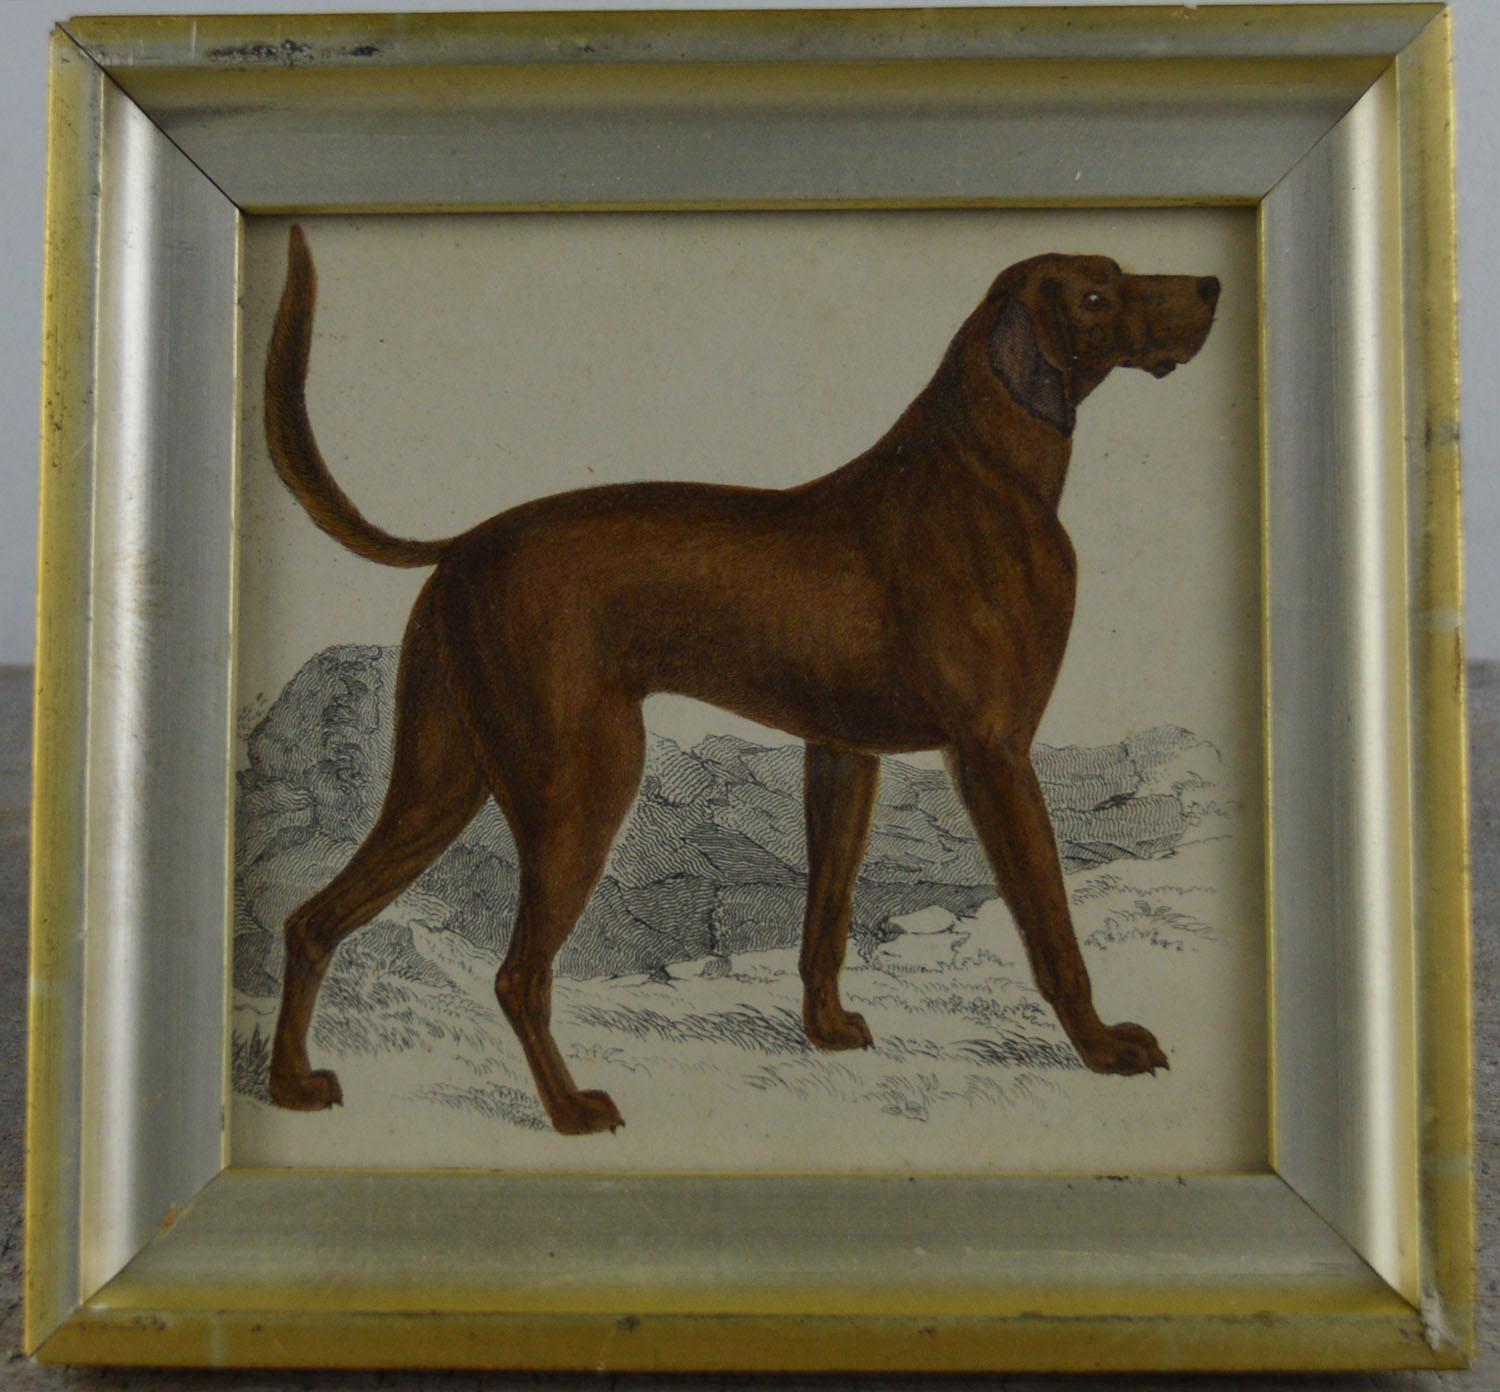 Folk Art Original Antique Print of an English Sporting Dog, 1847